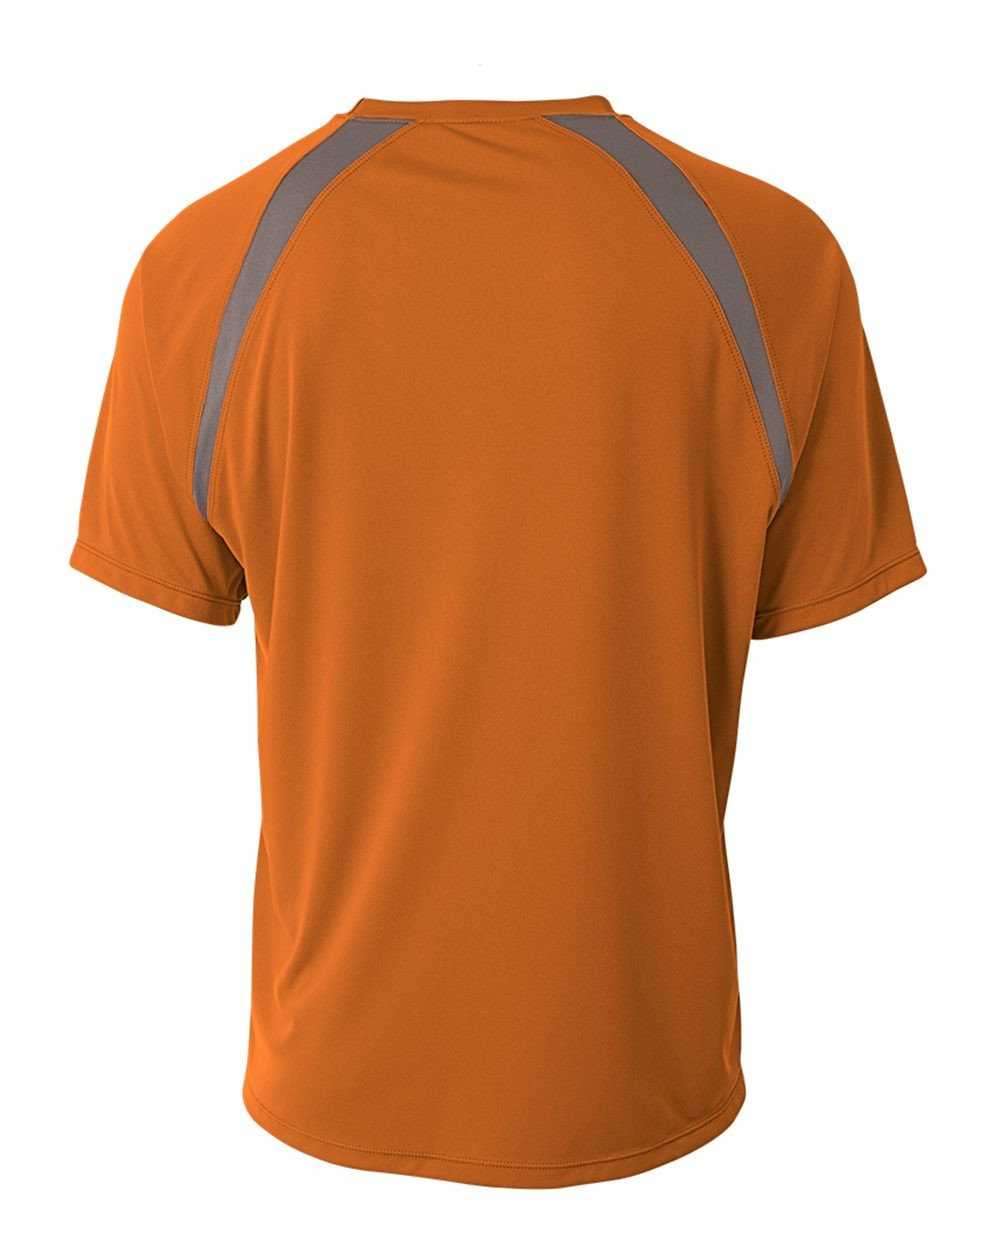 A4 N3001 Spartan Short Sleeve Color Block Crew - Orange Graphite - HIT a Double